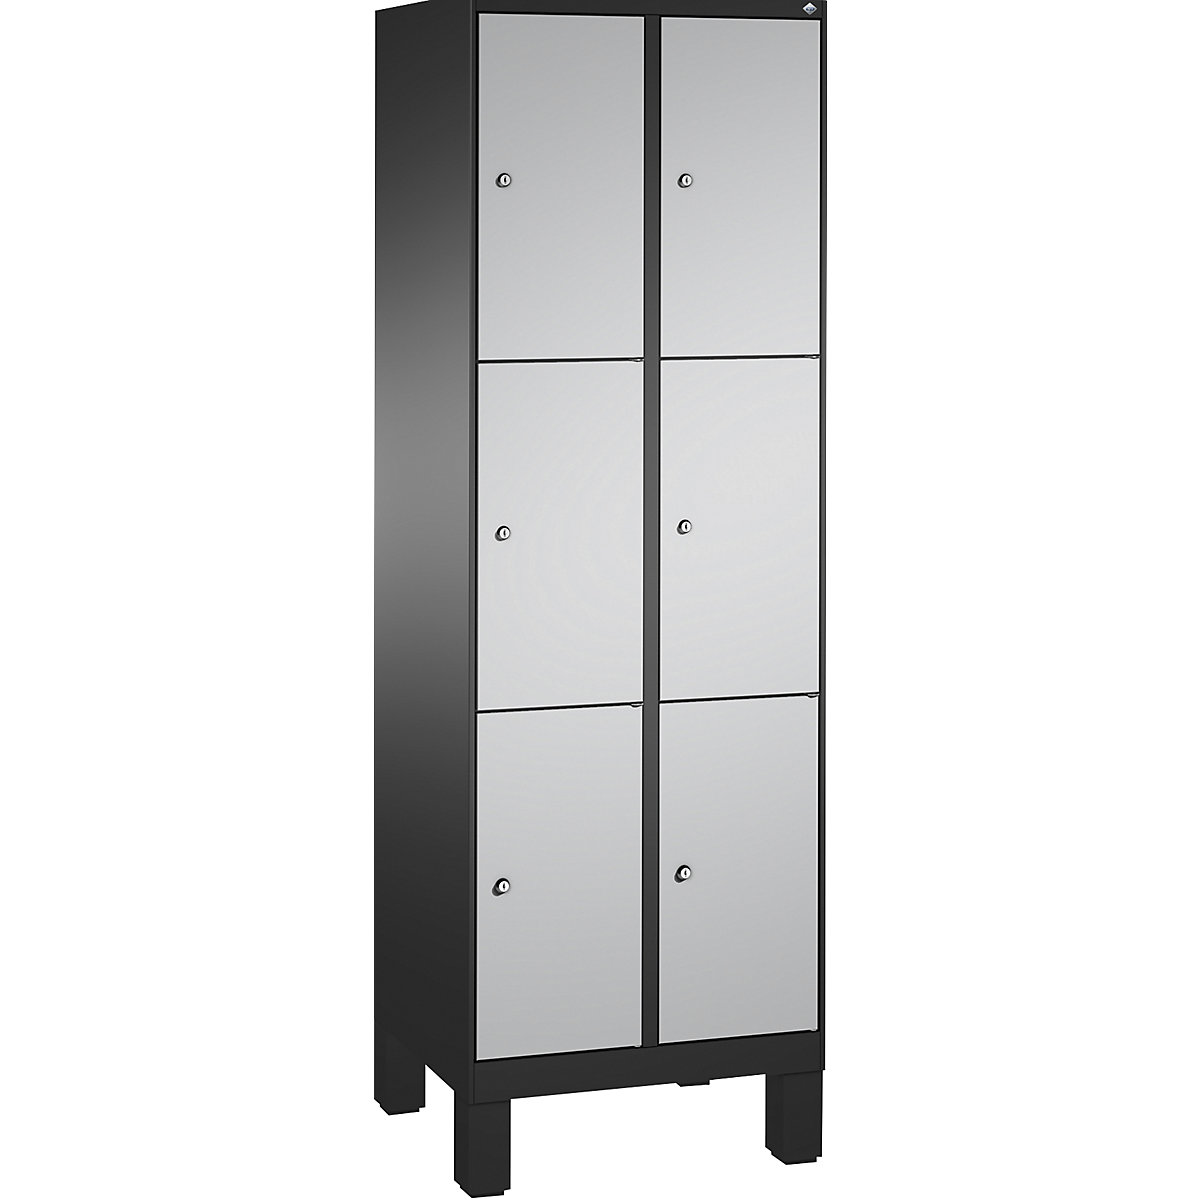 EVOLO locker unit, with feet – C+P, 2 compartments, 3 shelf compartments each, compartment width 300 mm, black grey / white aluminium-11